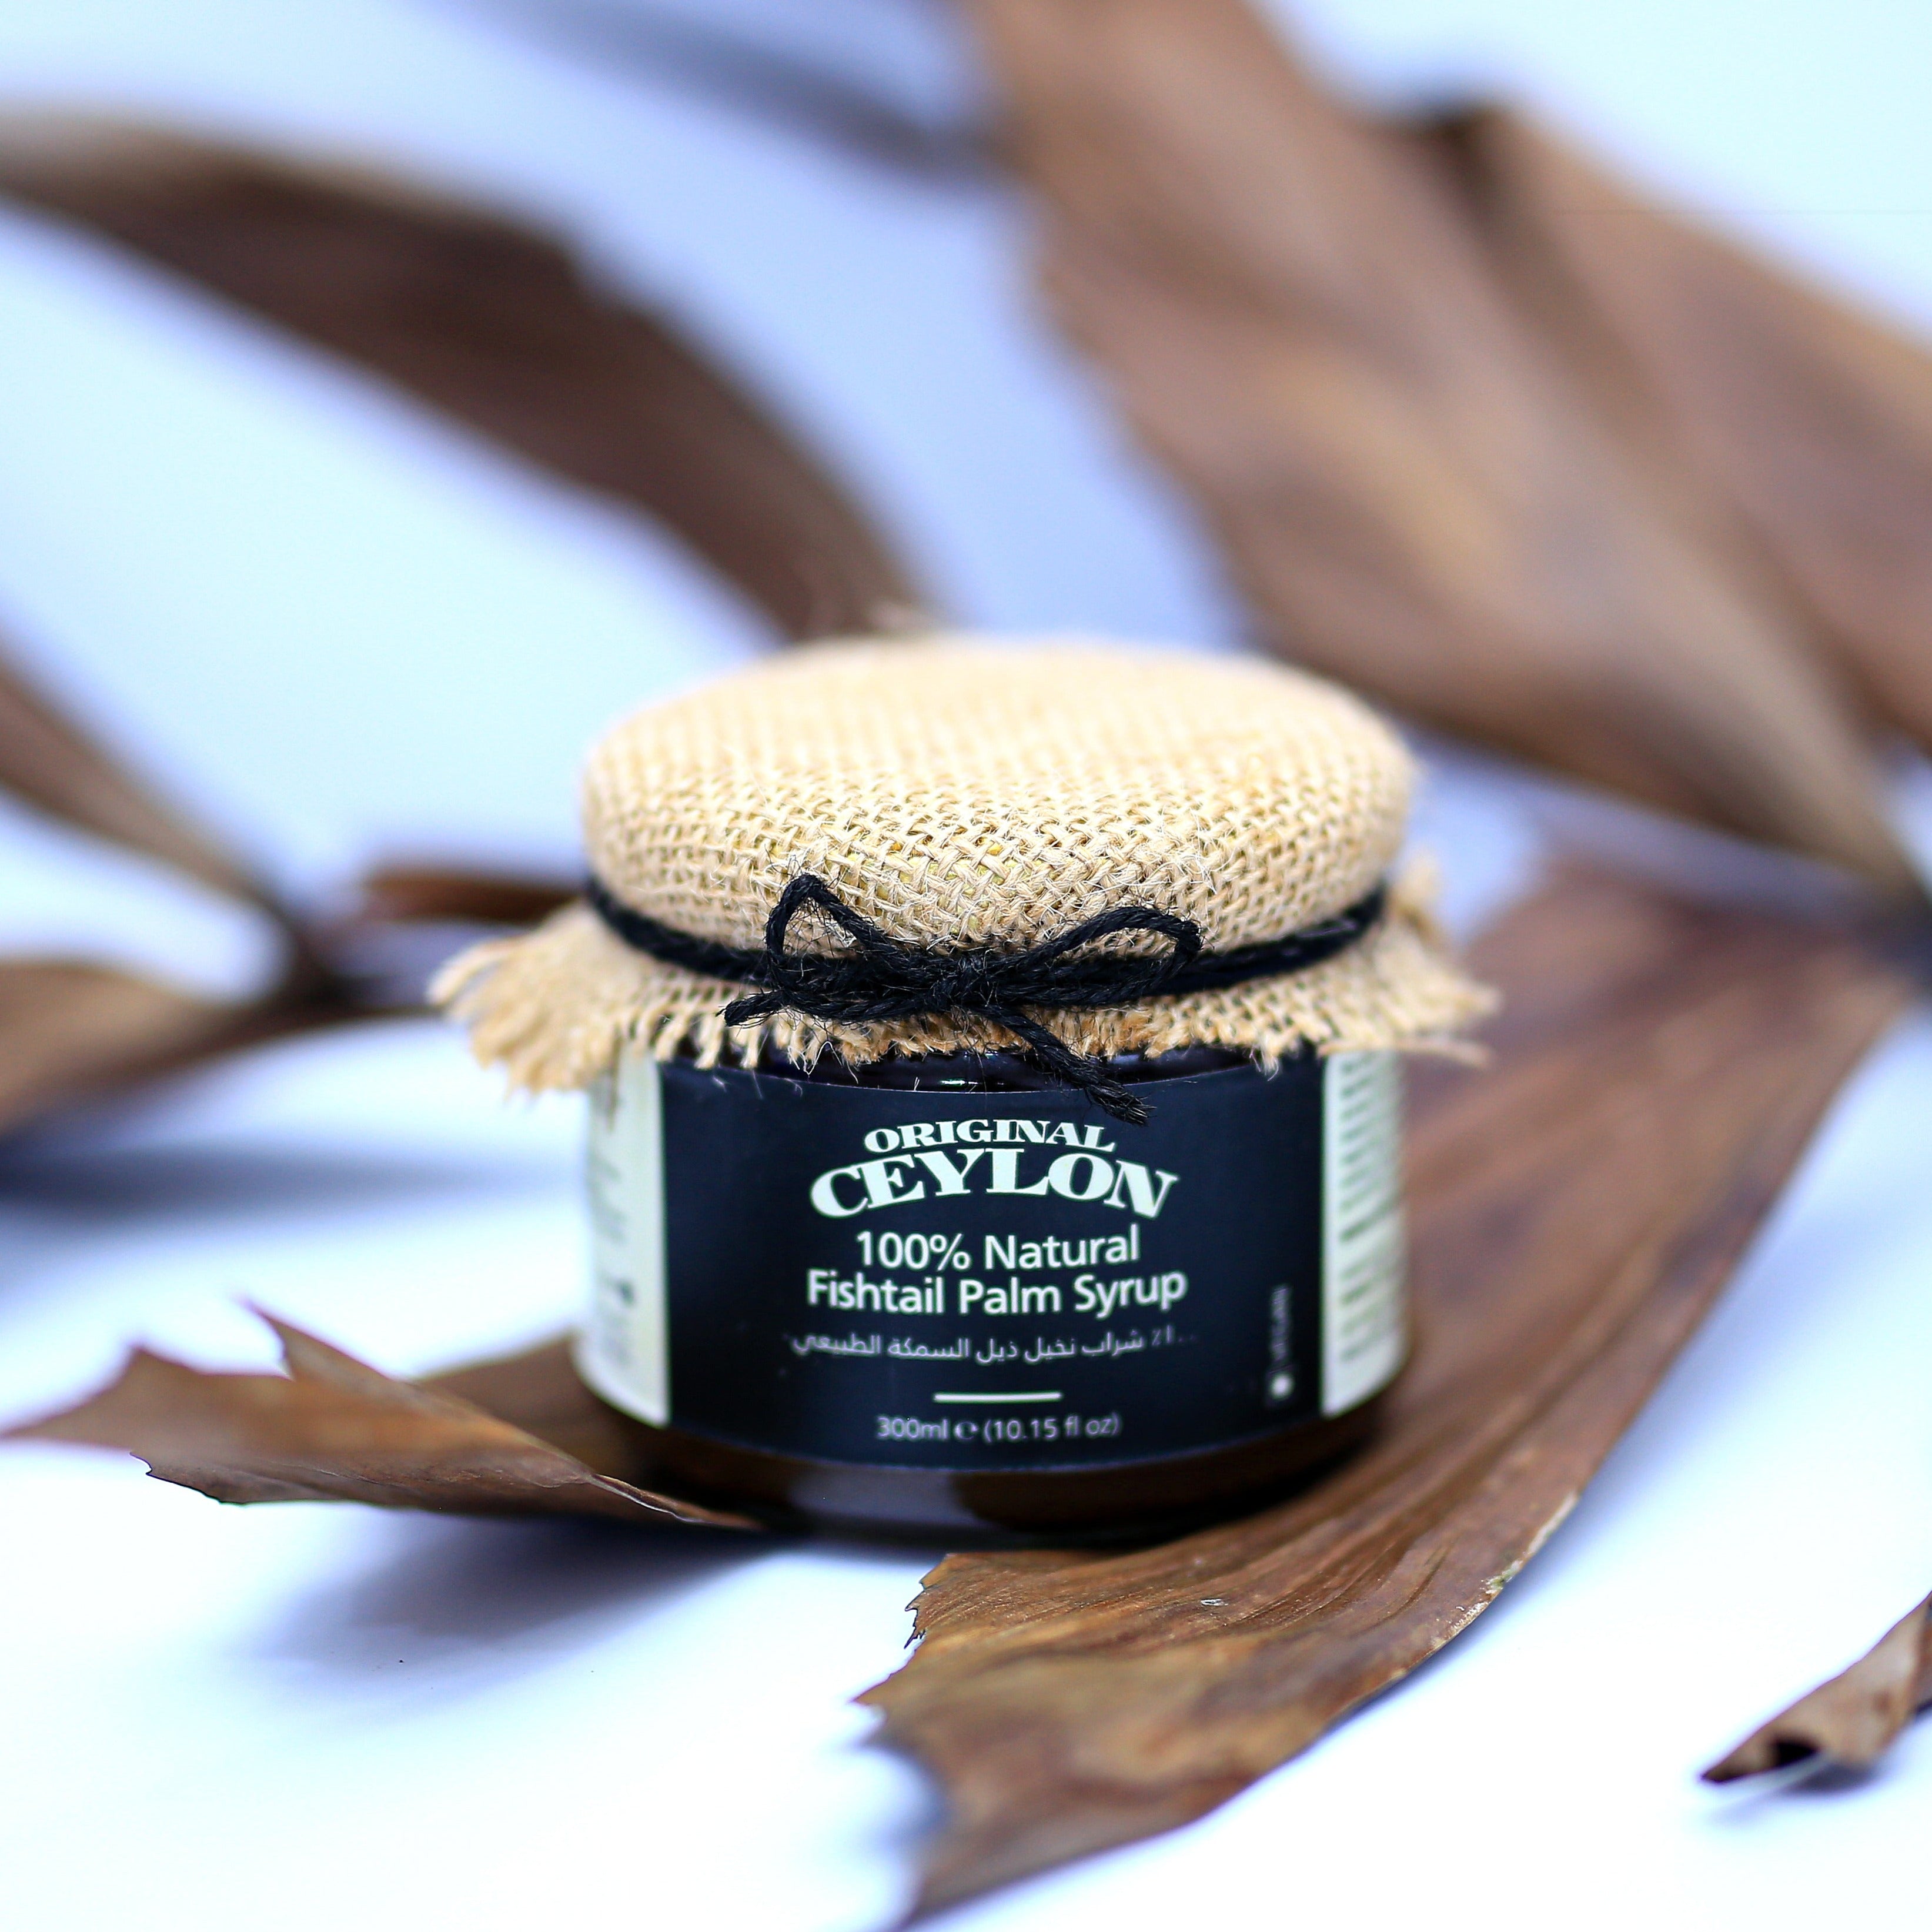 ORIGINAL CEYLON 100% Natural Fishtail Palm Syrup, 300ml